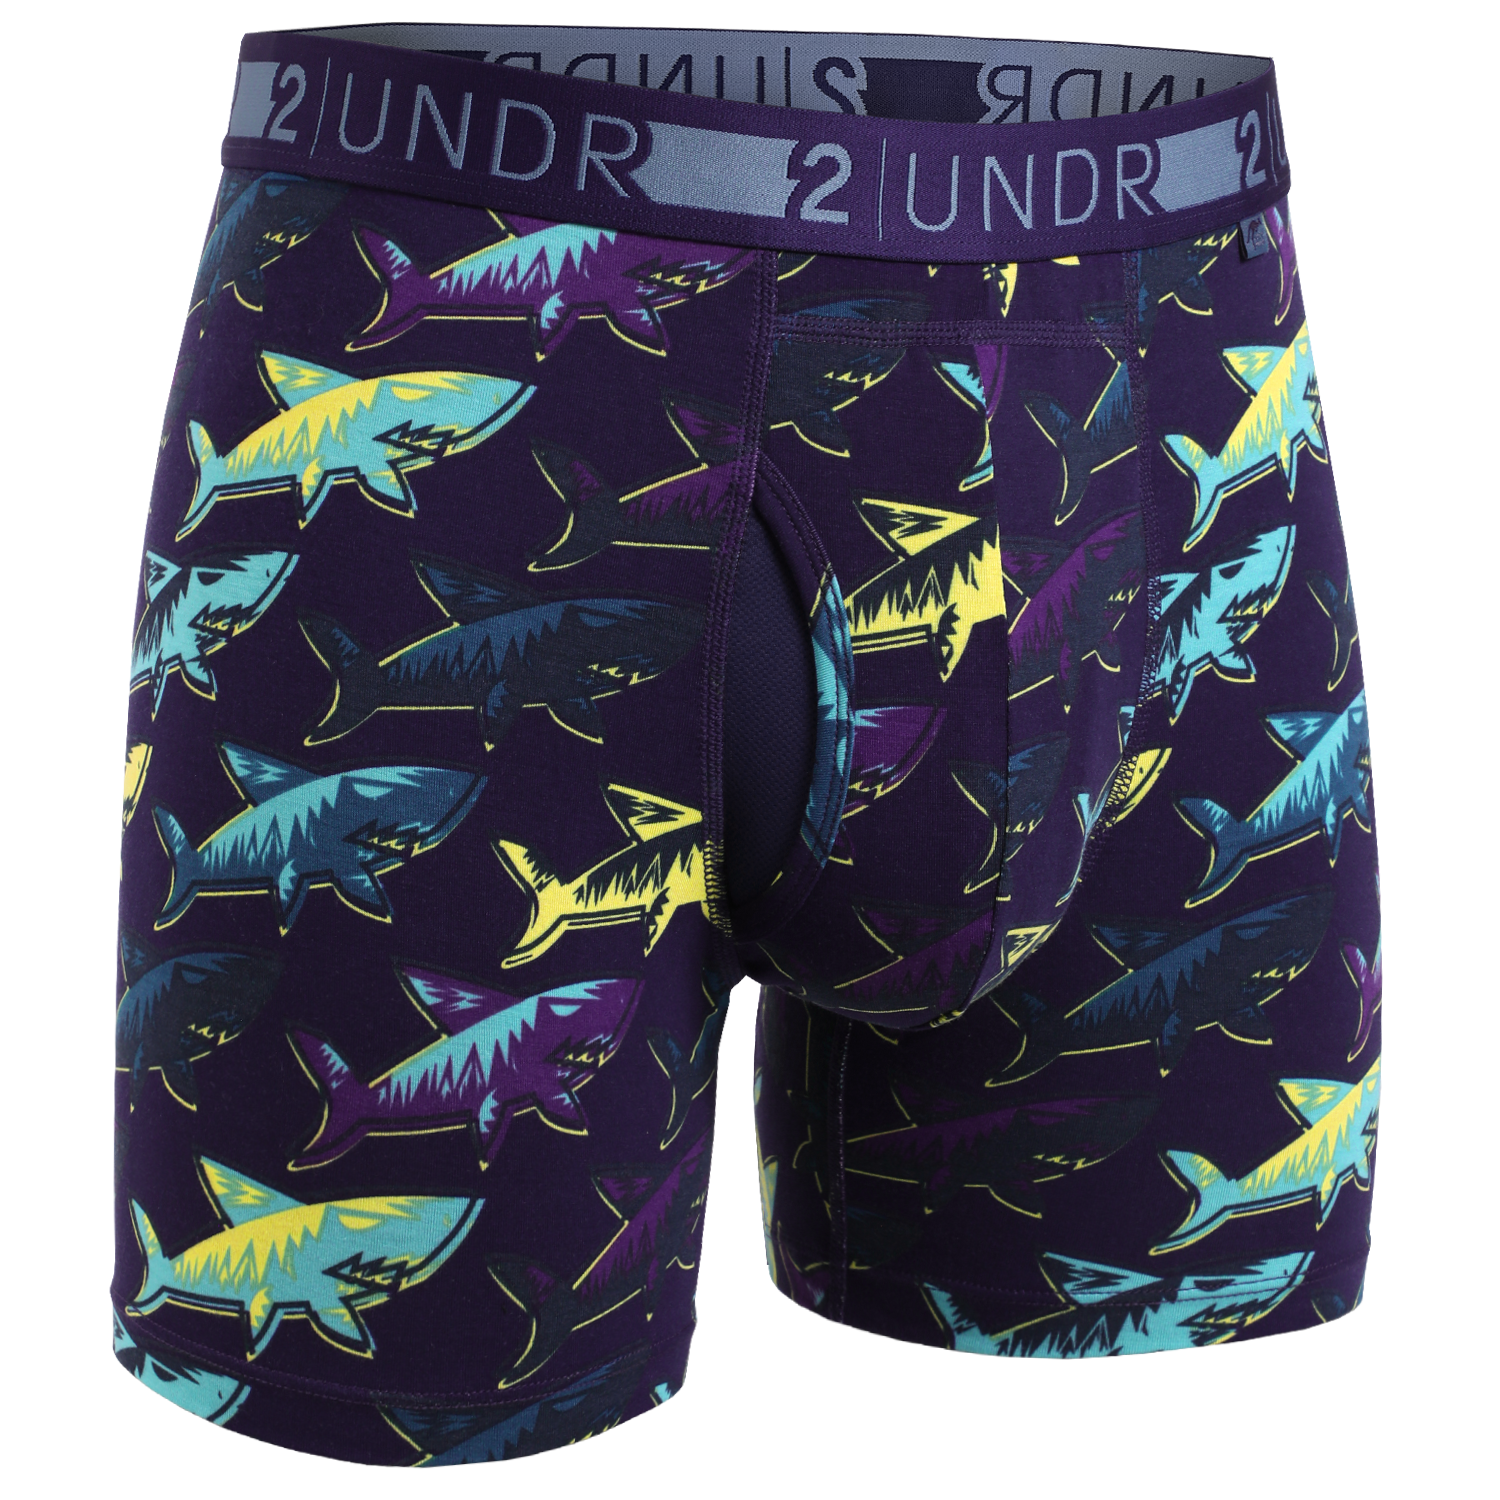 2UNDR Men's Underwear - Racquetball Warehouse